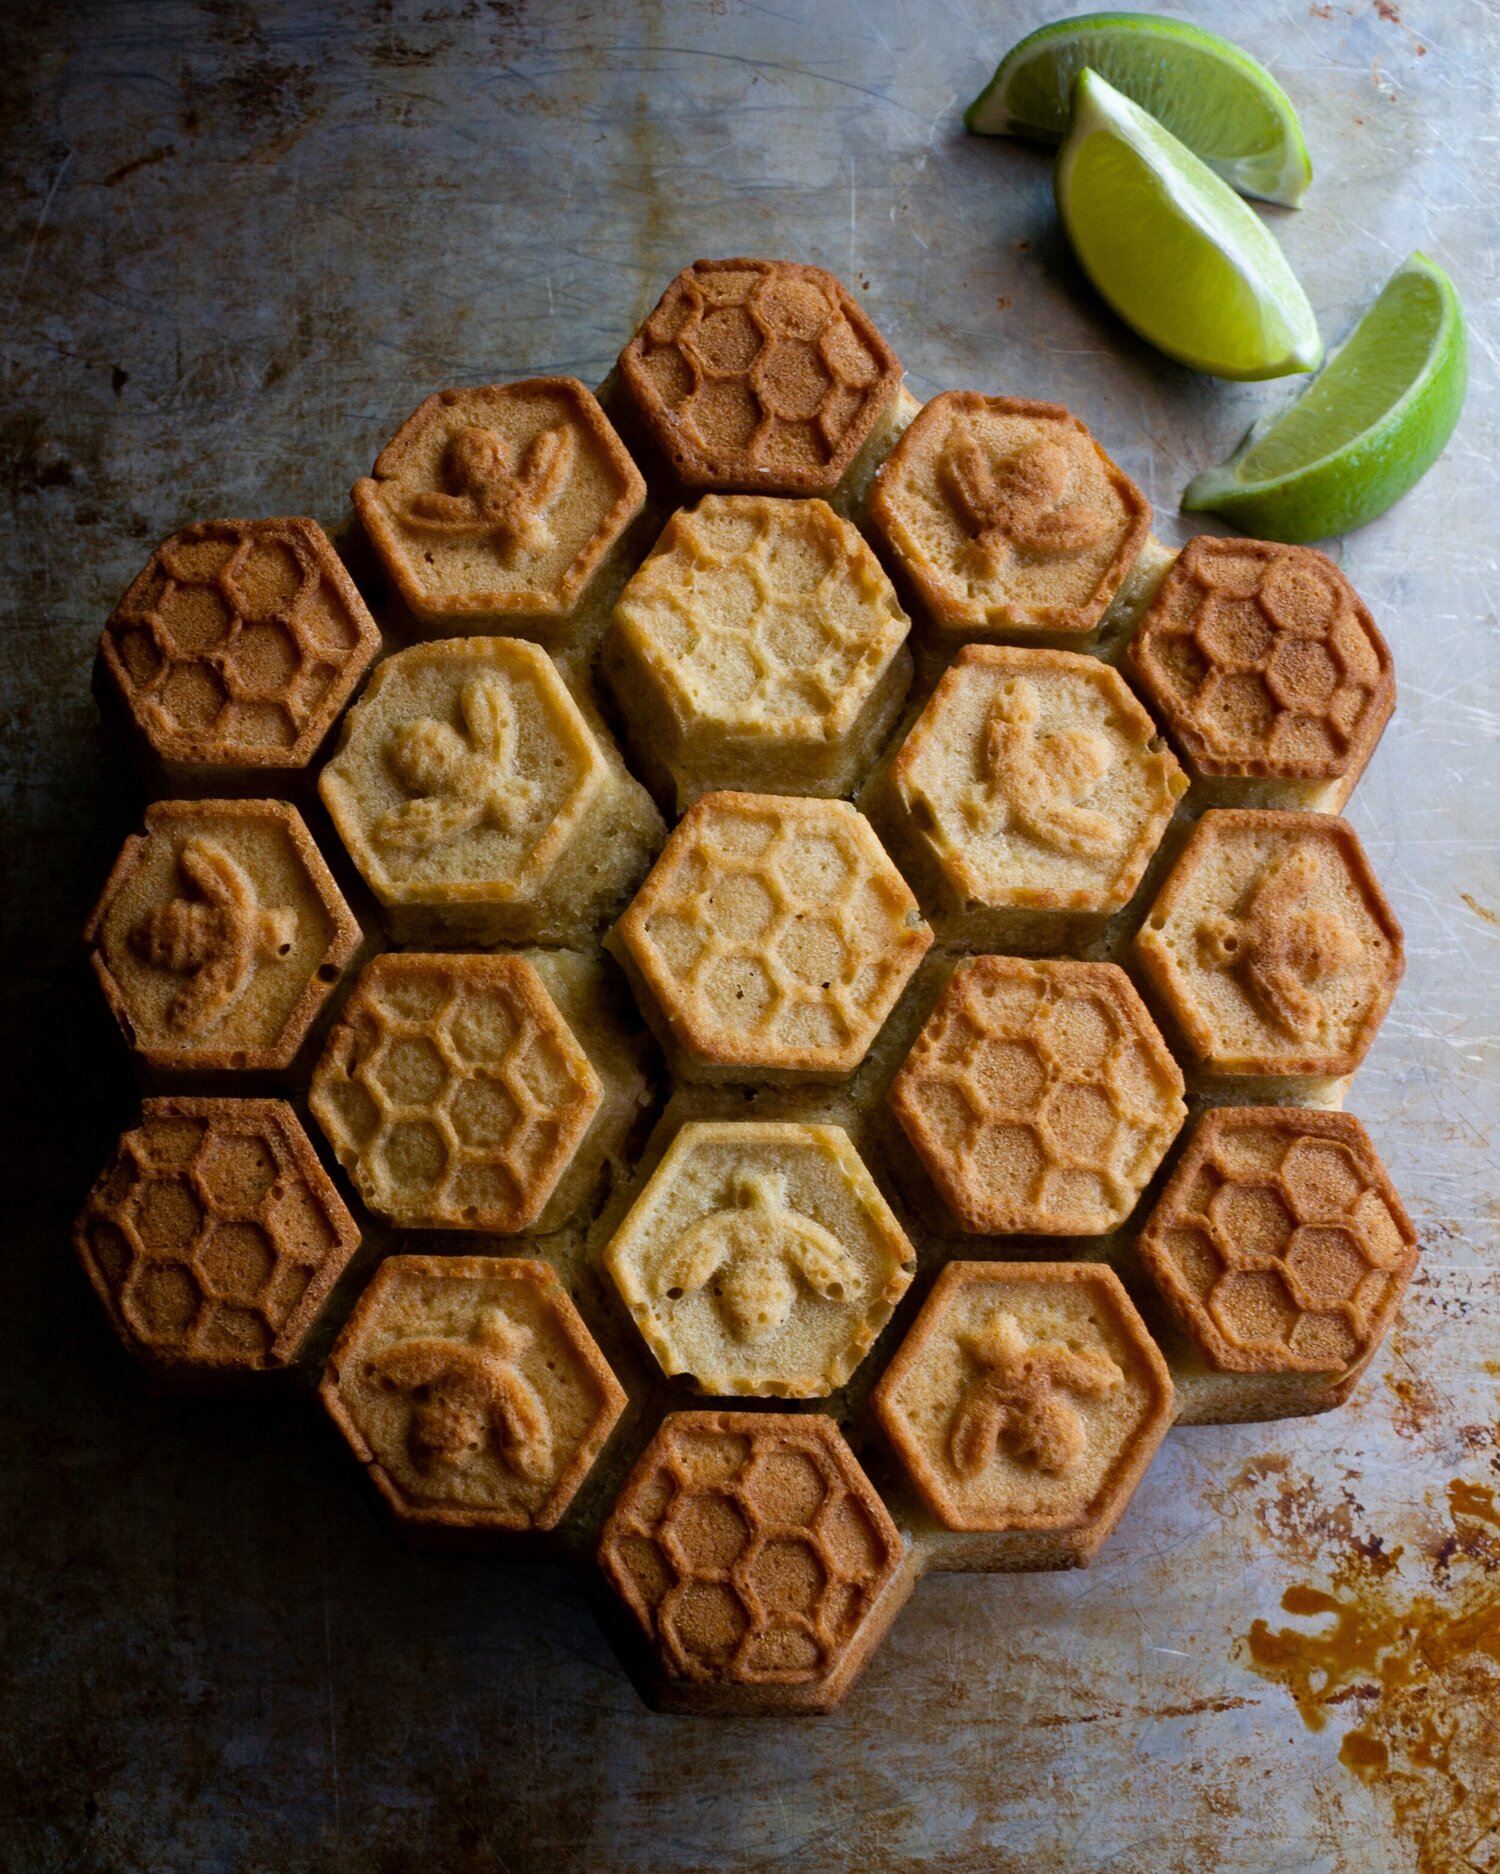 bakeware silicone mold bee honeycomb cake